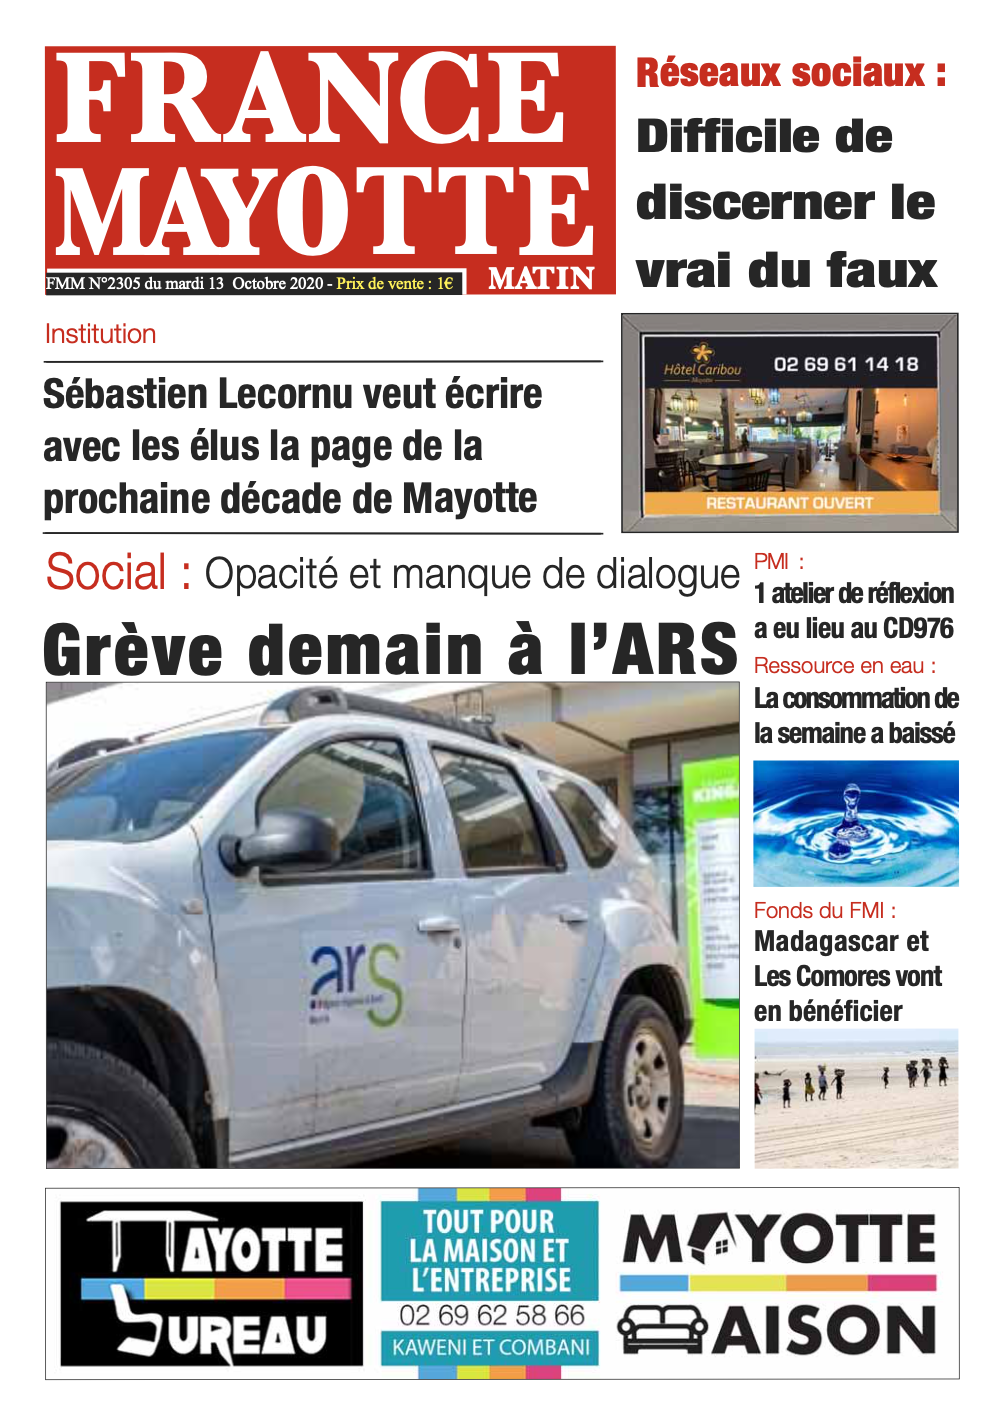 France Mayotte Mardi 13 octobre 2020